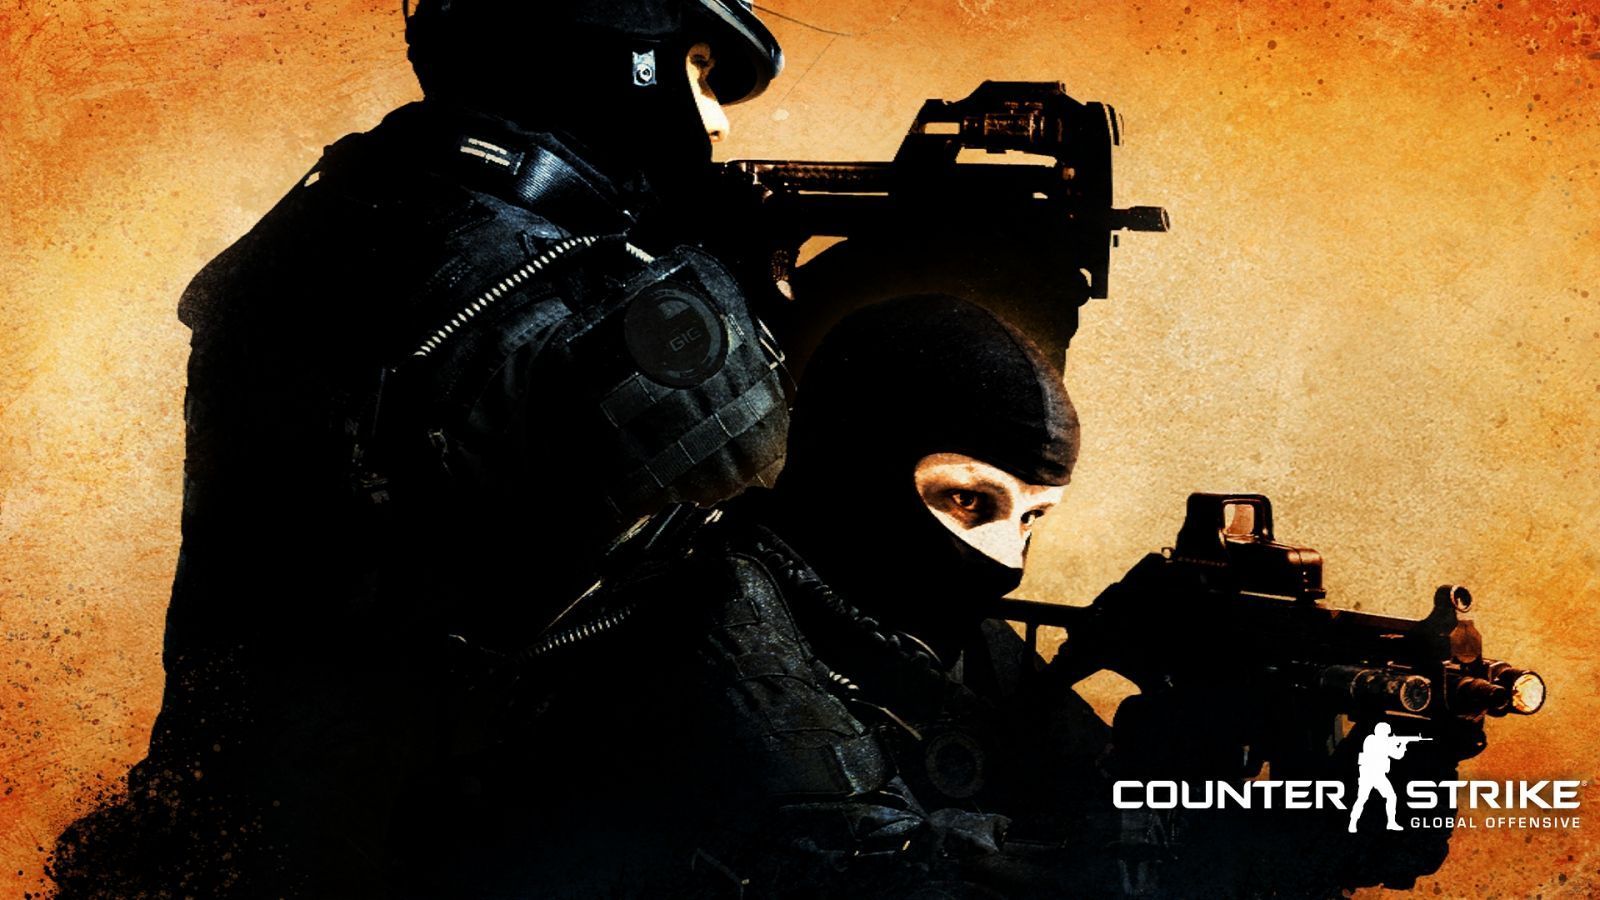 Download Counter Strike Wallpaper 7816 1920x1080 px High ...